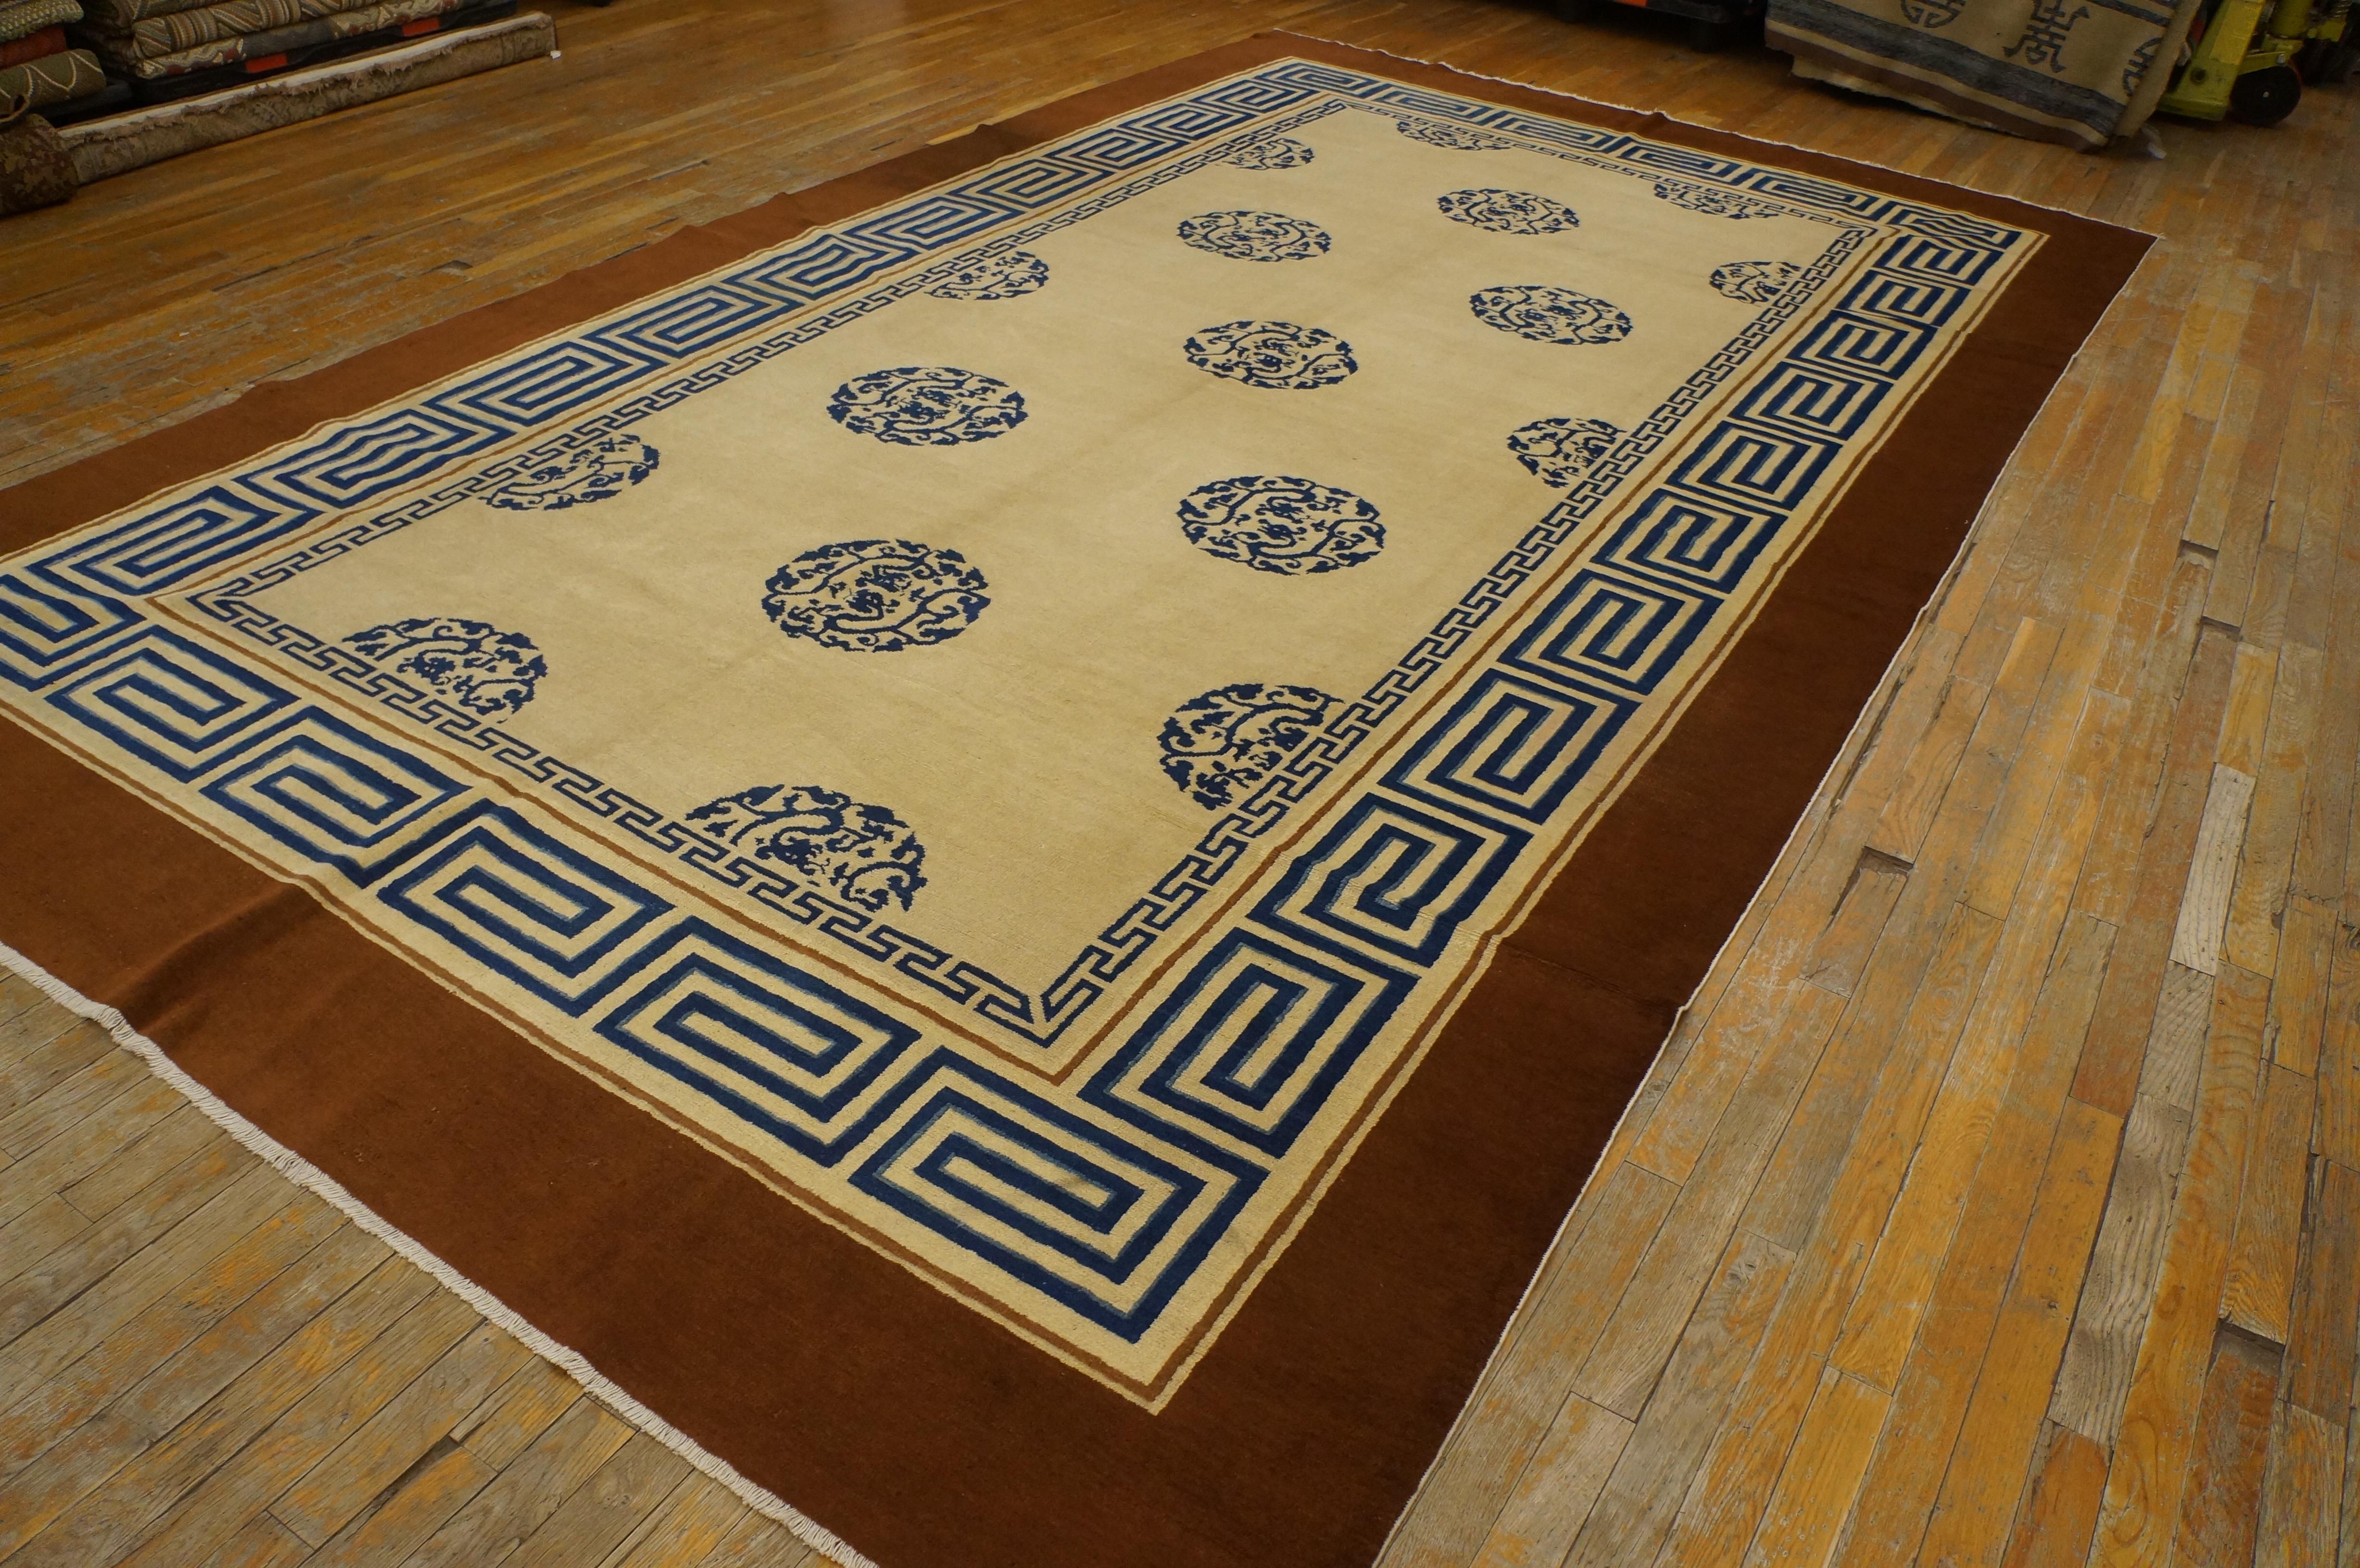 Antique Chinese Peking Carpet Dating From 1870 
Measuring 8' x 13'6